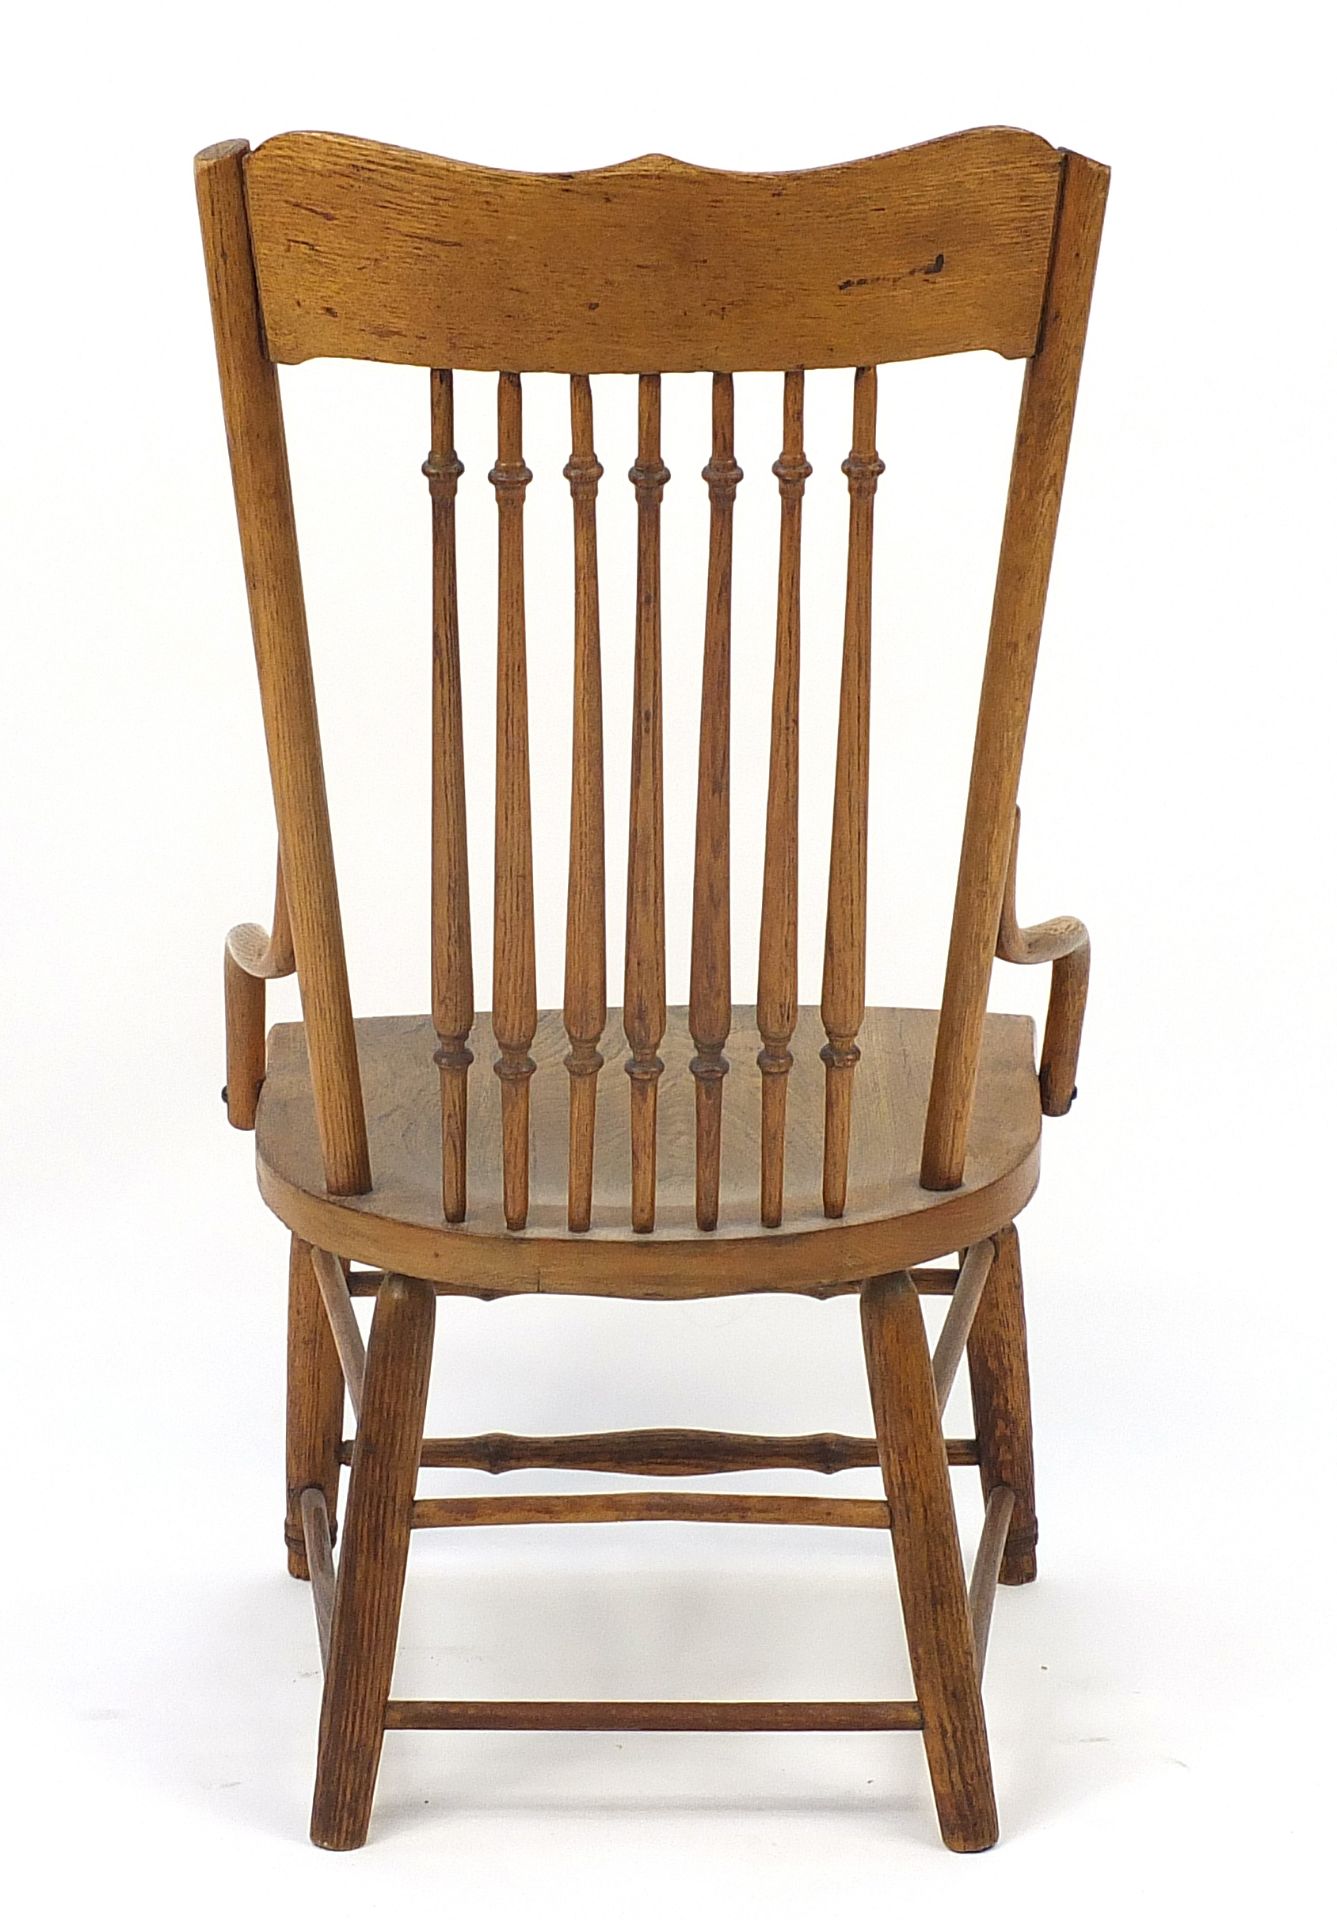 Antique elm stick back chair, 91cm high - Image 4 of 4